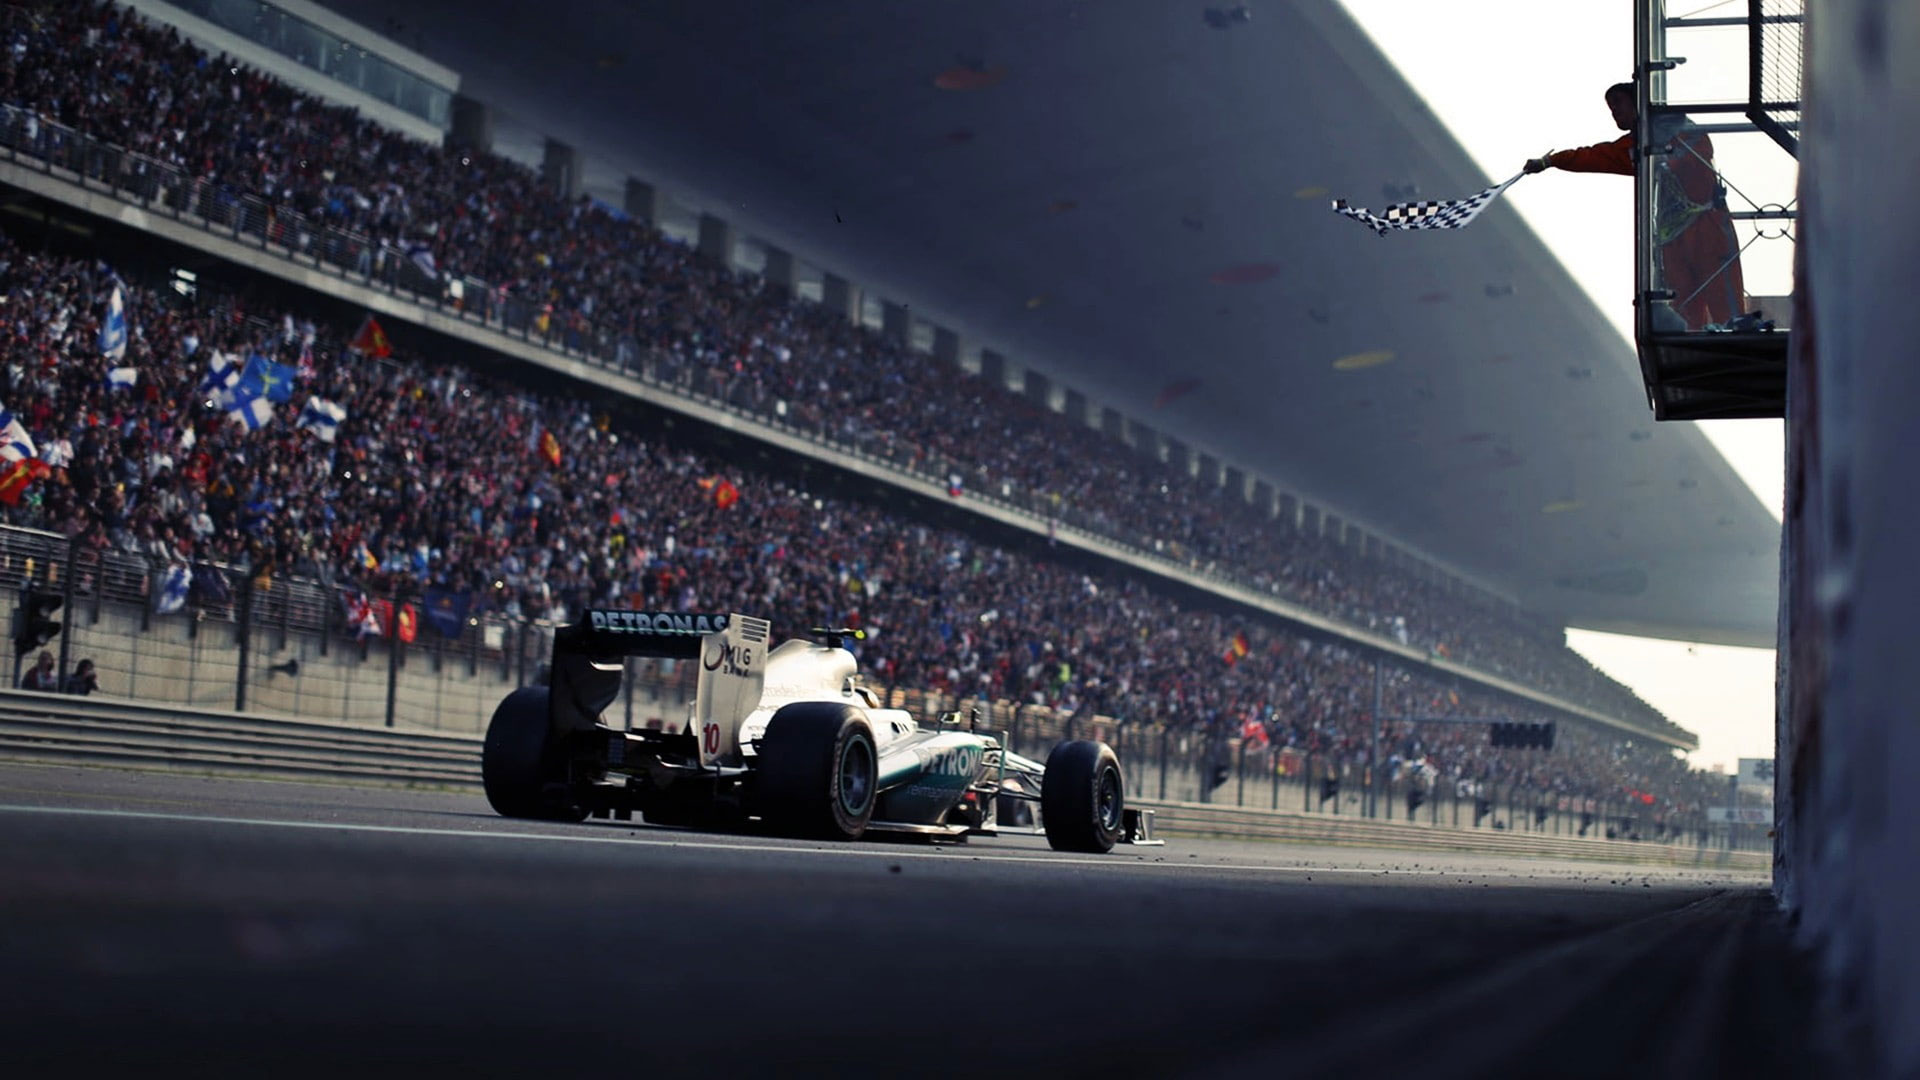 Wallpaper Race Car Formula One F1 Race Track Checkered, F1, Cars & Motos